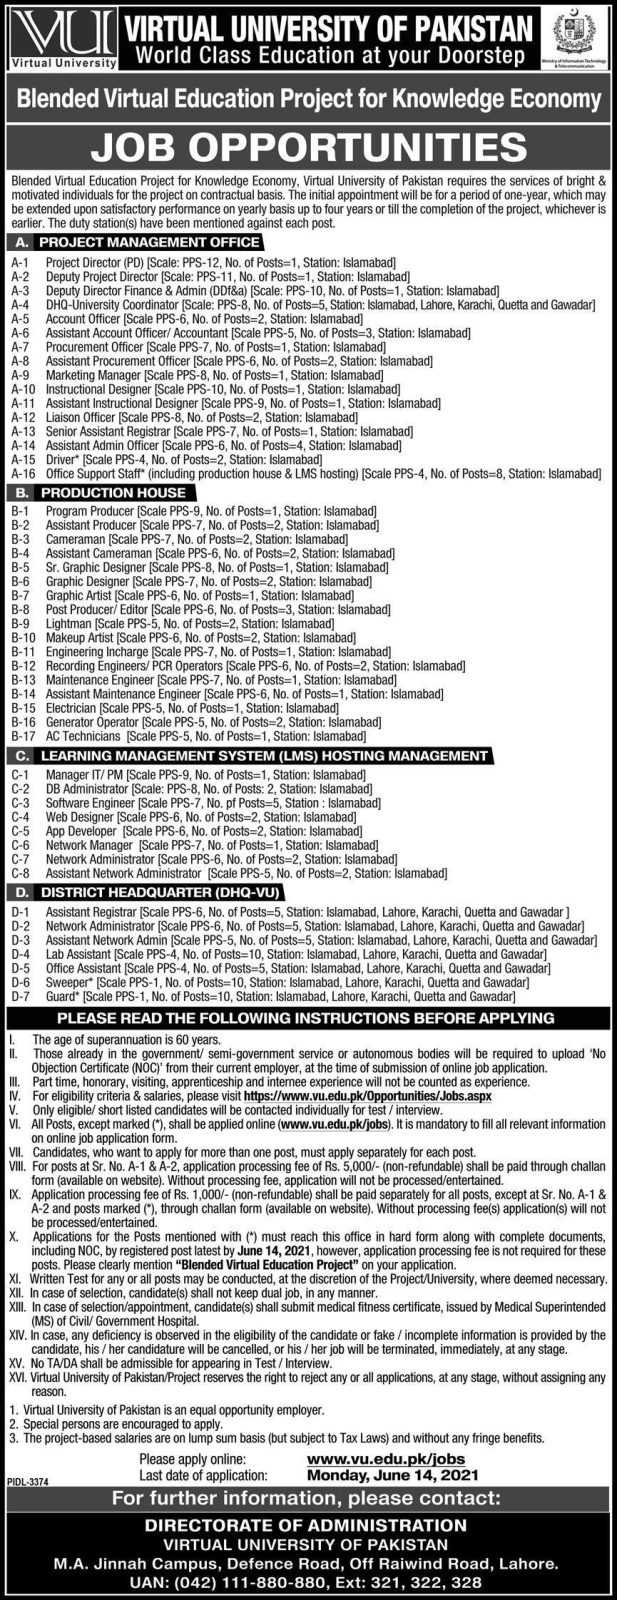 Virtual University of Pakistan Jobs 2021